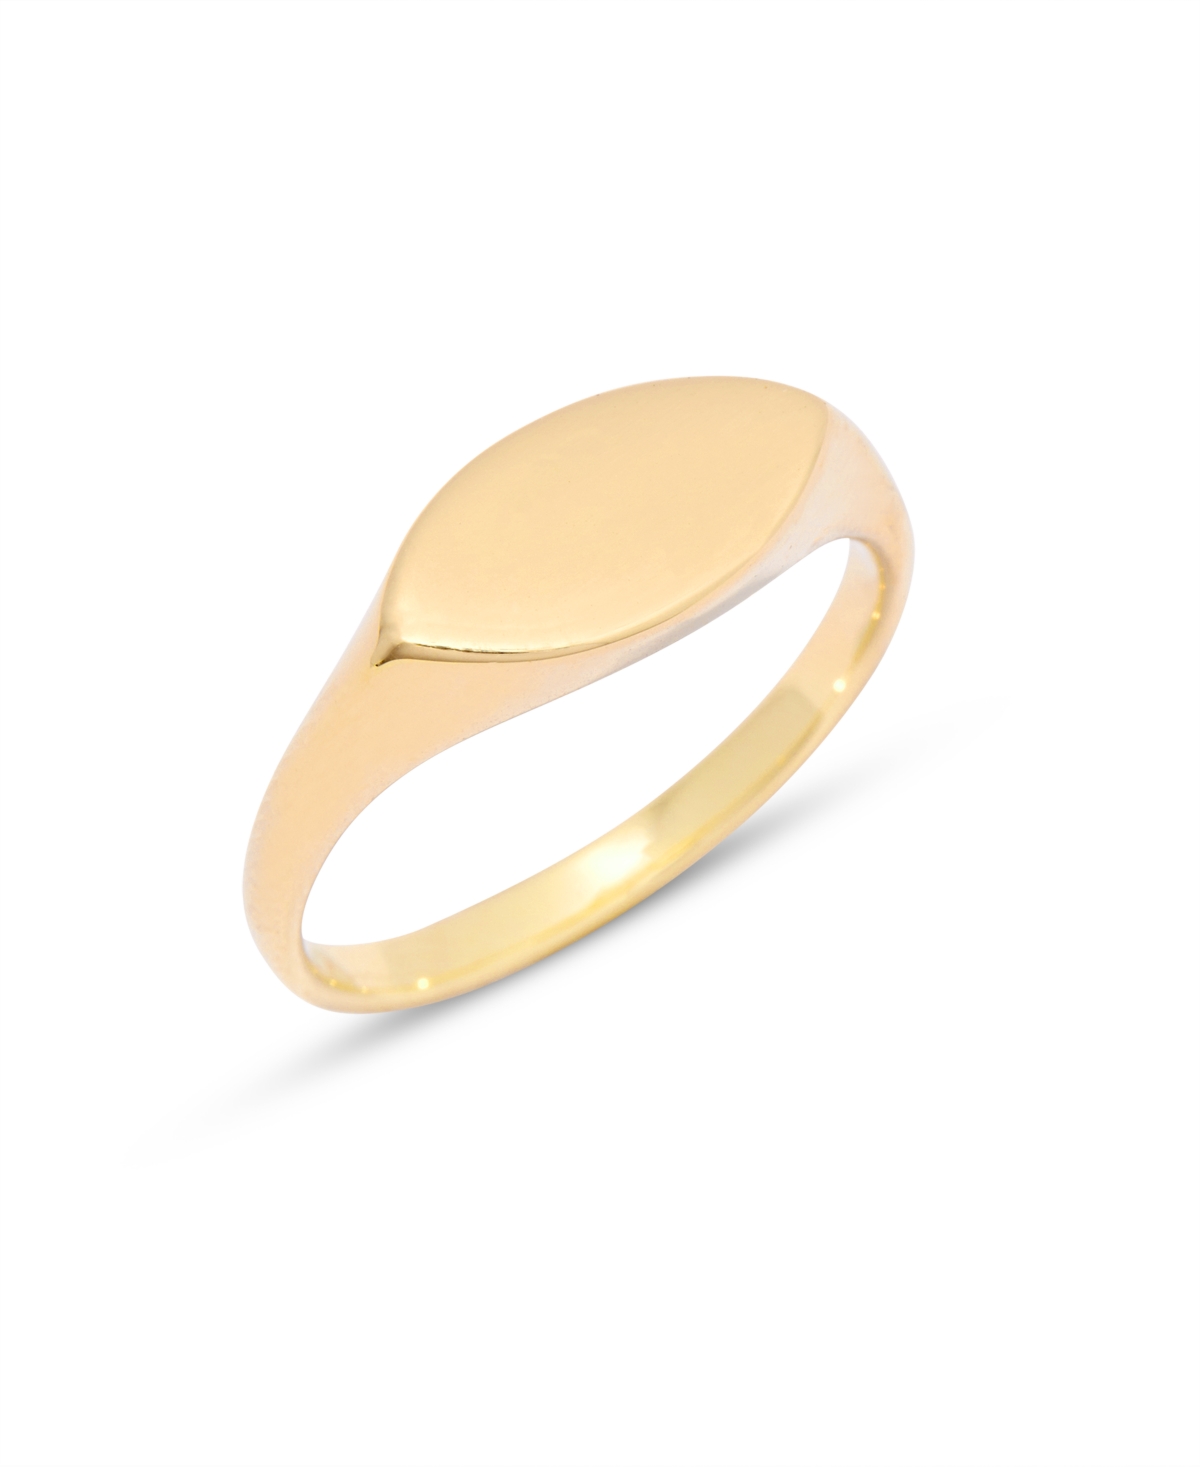 Brook & York "14k Gold" Evelyn Signet Ring